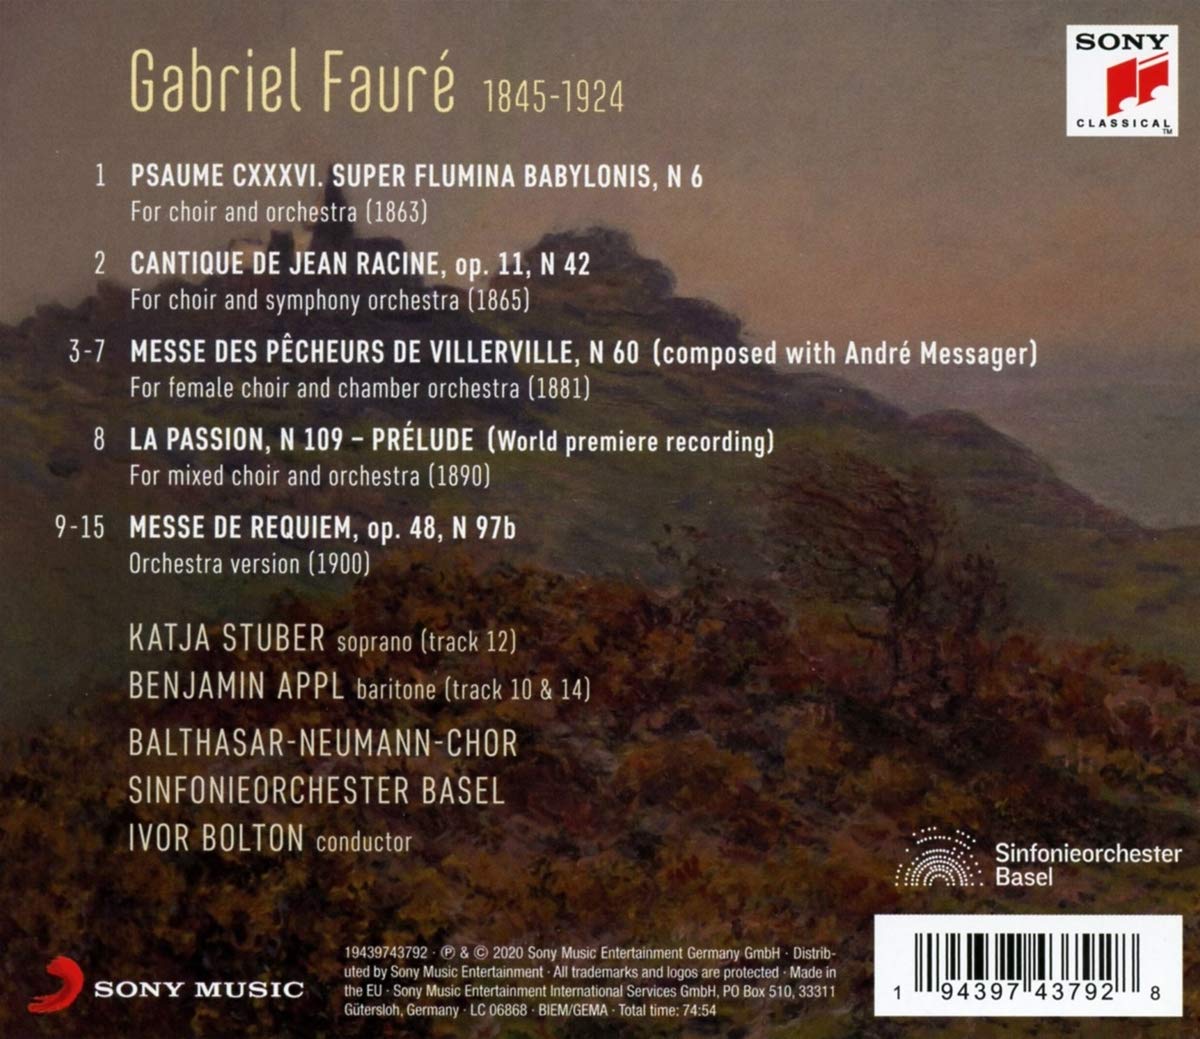 Ivor Bolton 포레: 종교 성악 작품집 - 시크릿 포레 3집 (The Secret Faure 3 - Sacred Vocal Works - Requiem)